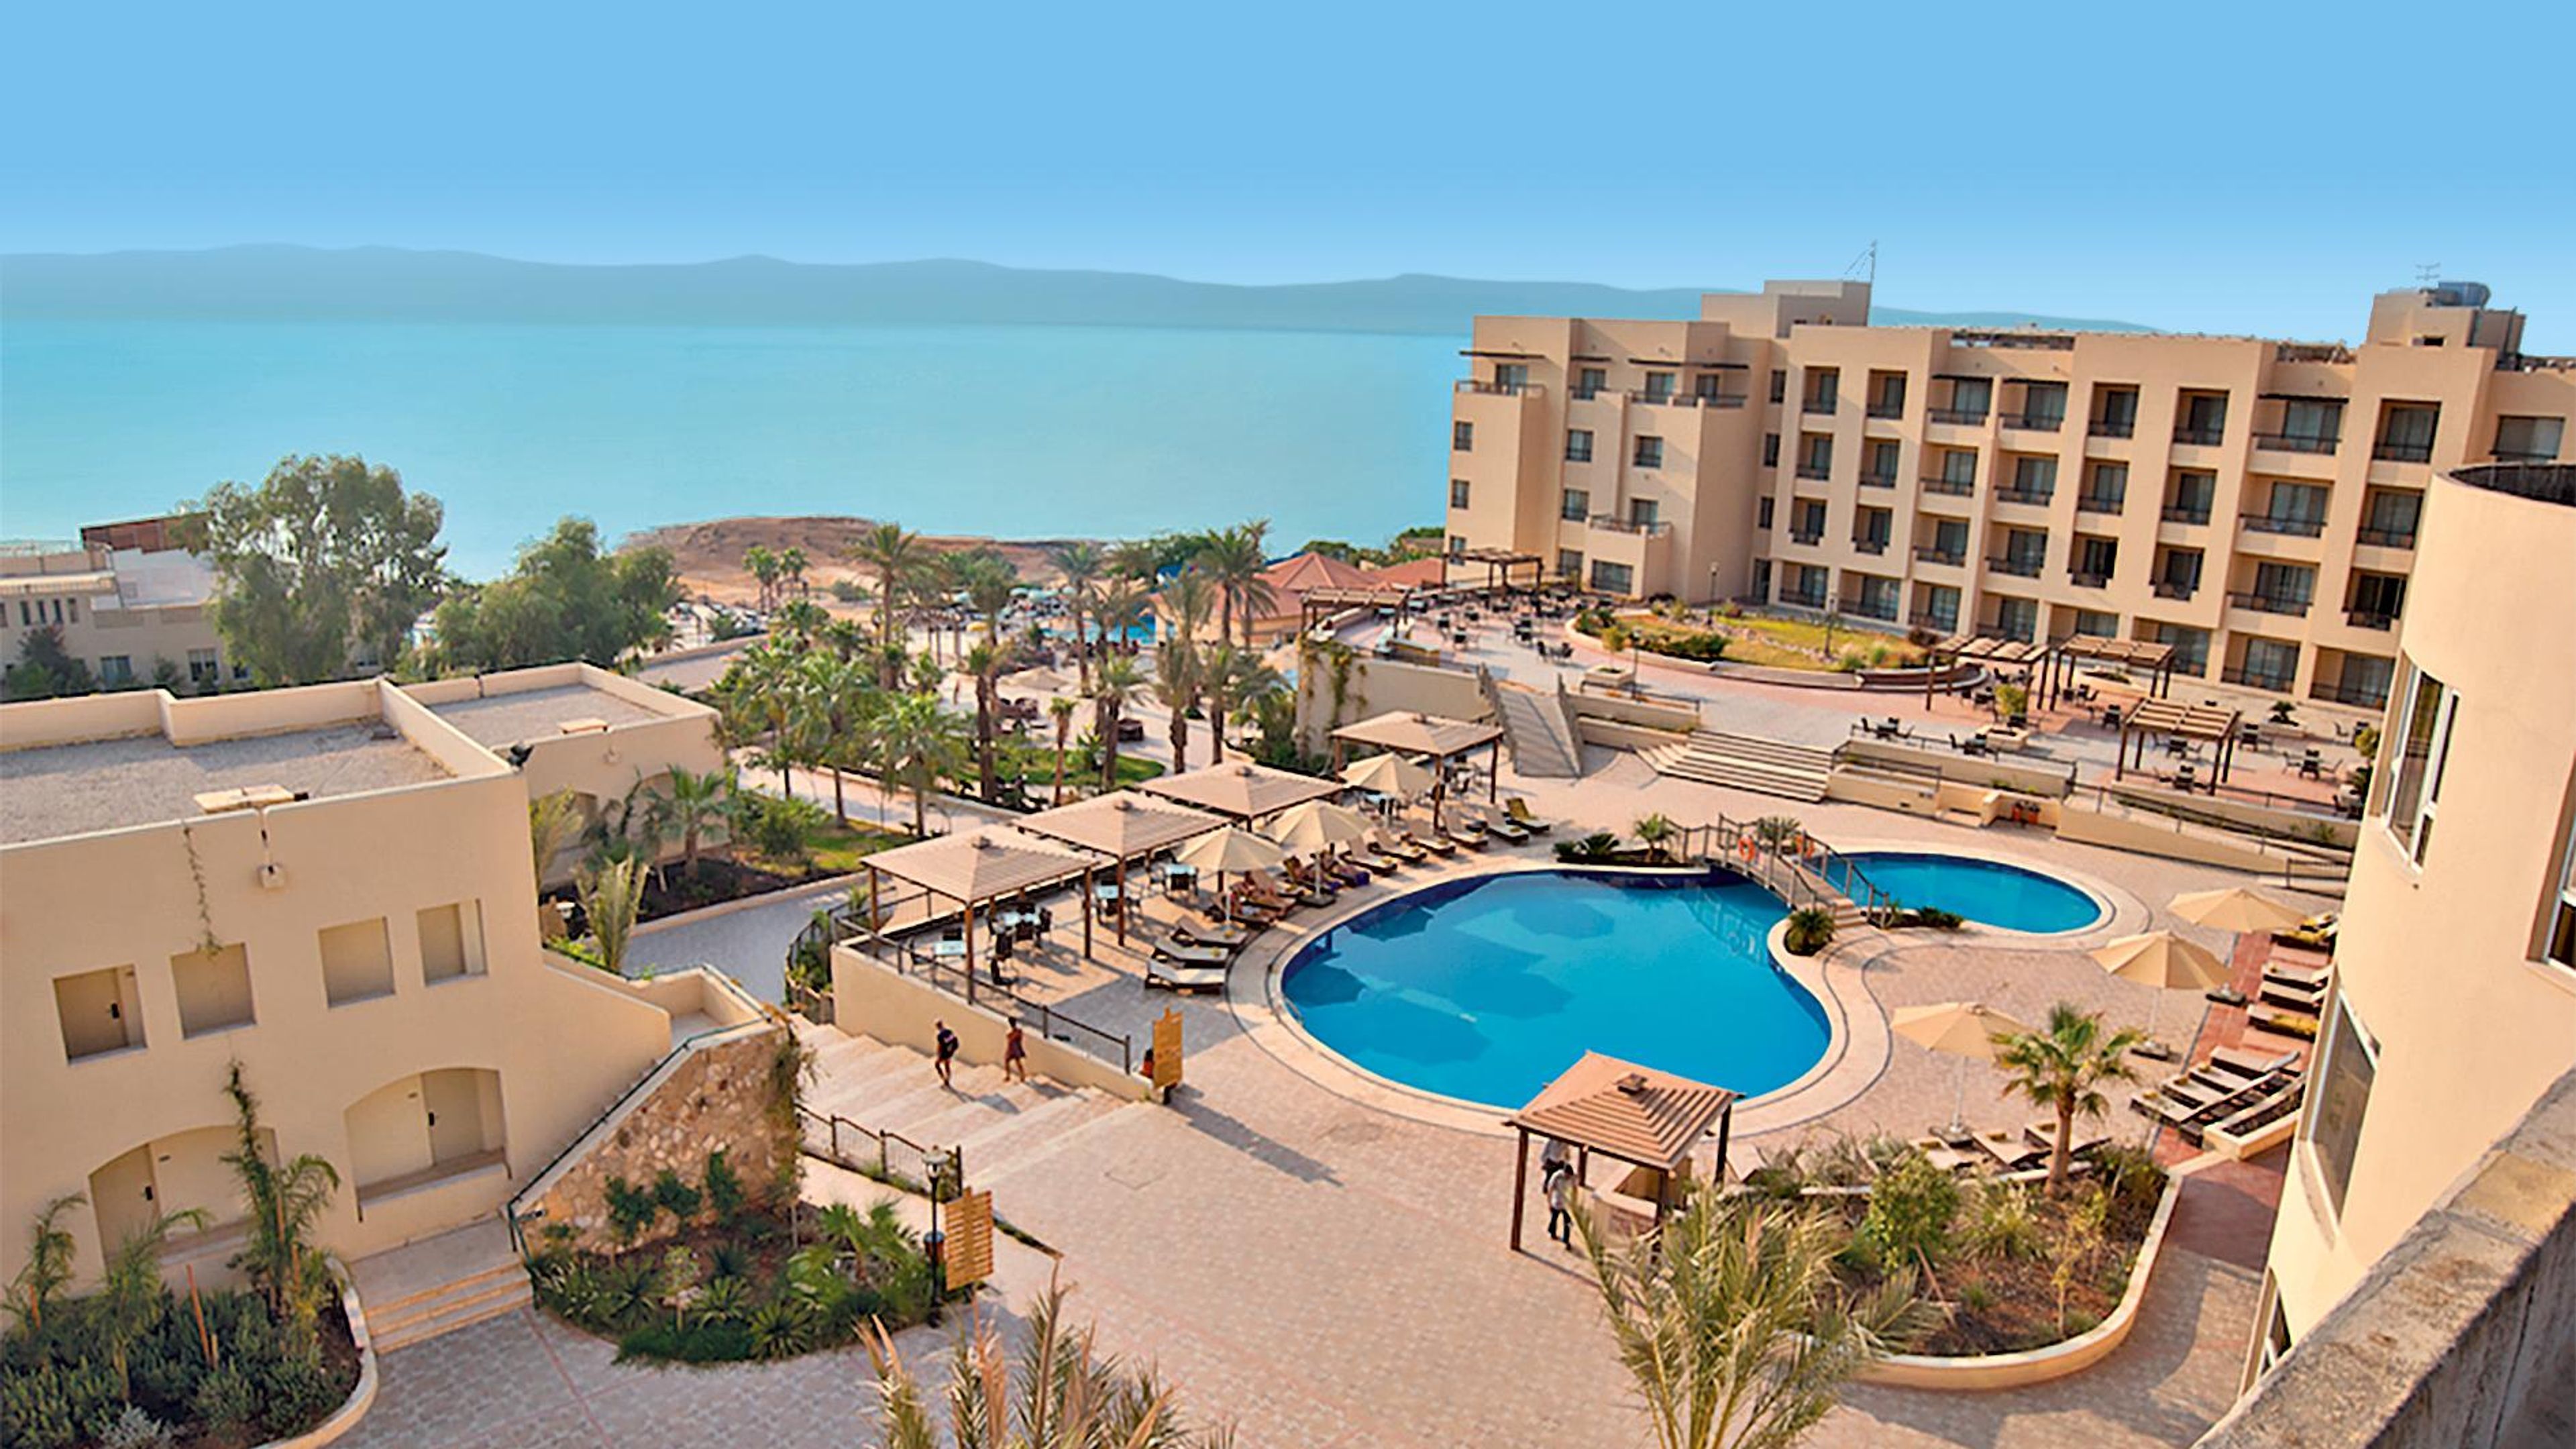 Dead Sea Spa Hotel with Medical Centre